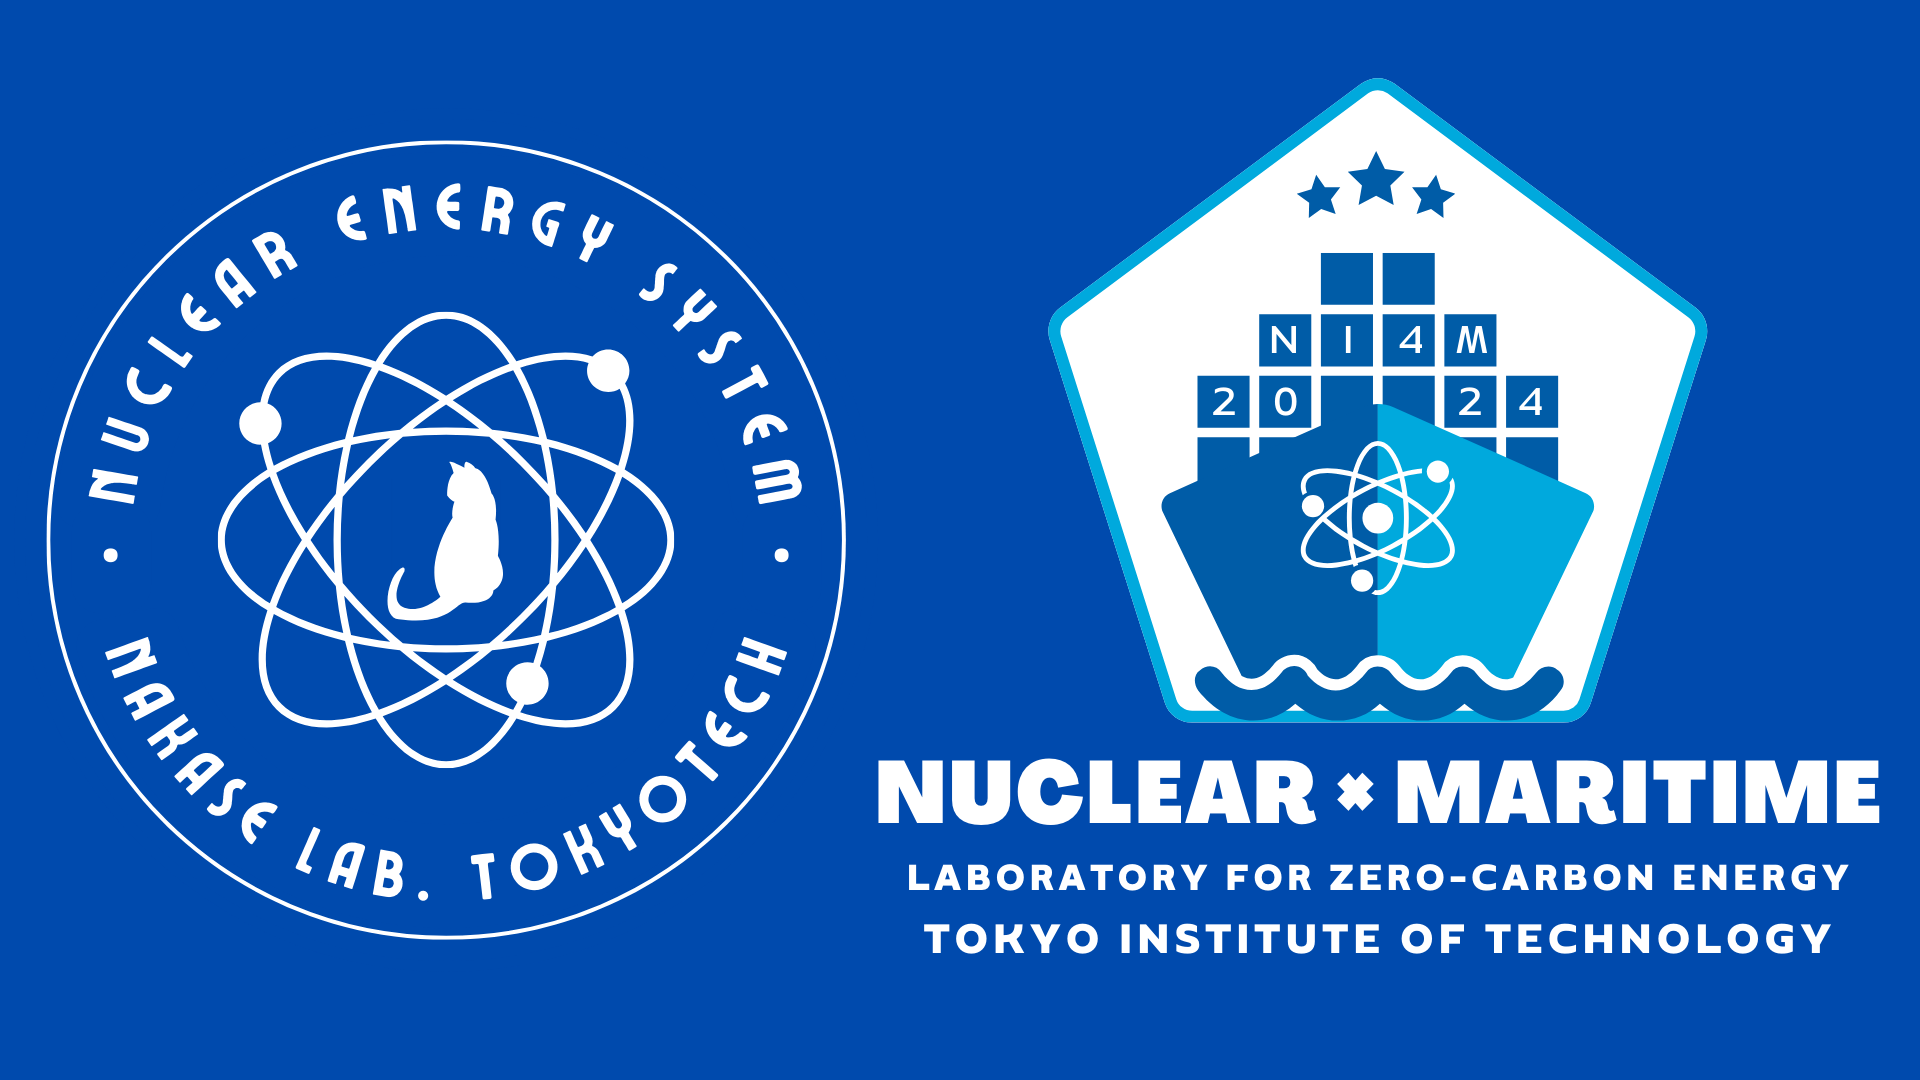 Nakase lab. Tokyo Institute of Technology